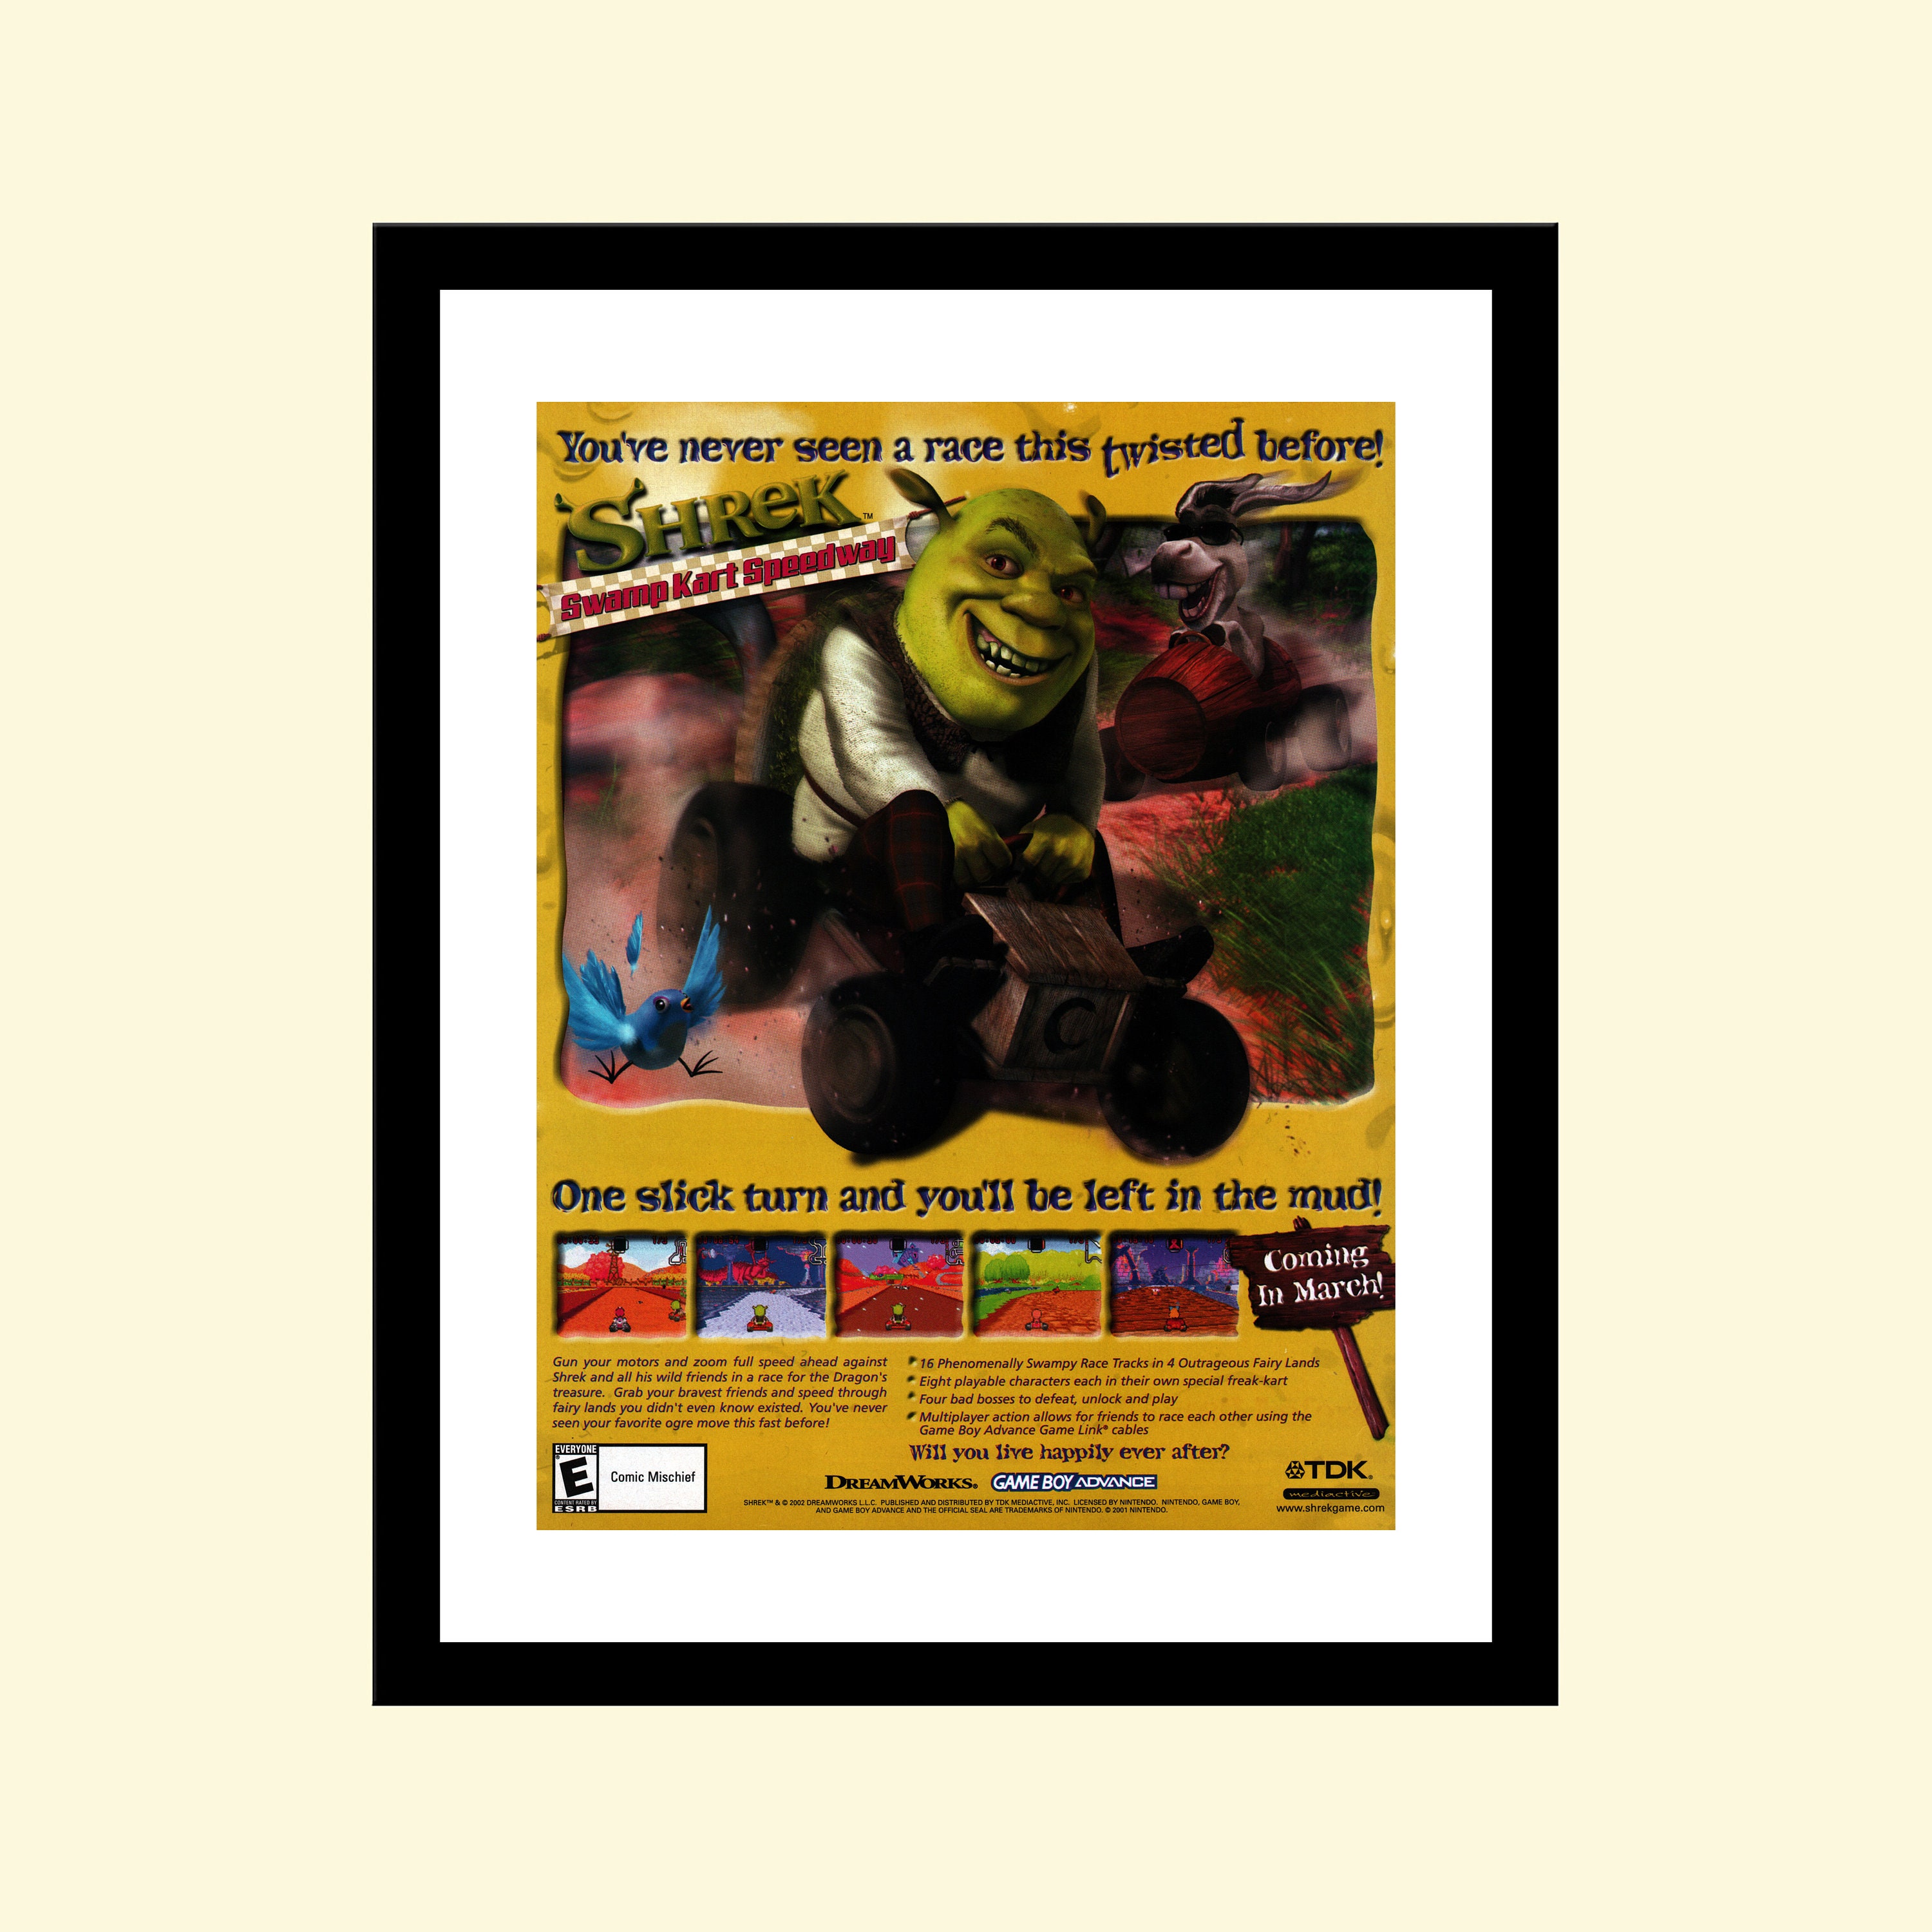 Shrek: Smash n' Crash Racing (Nintendo GameCube, 2006) for sale